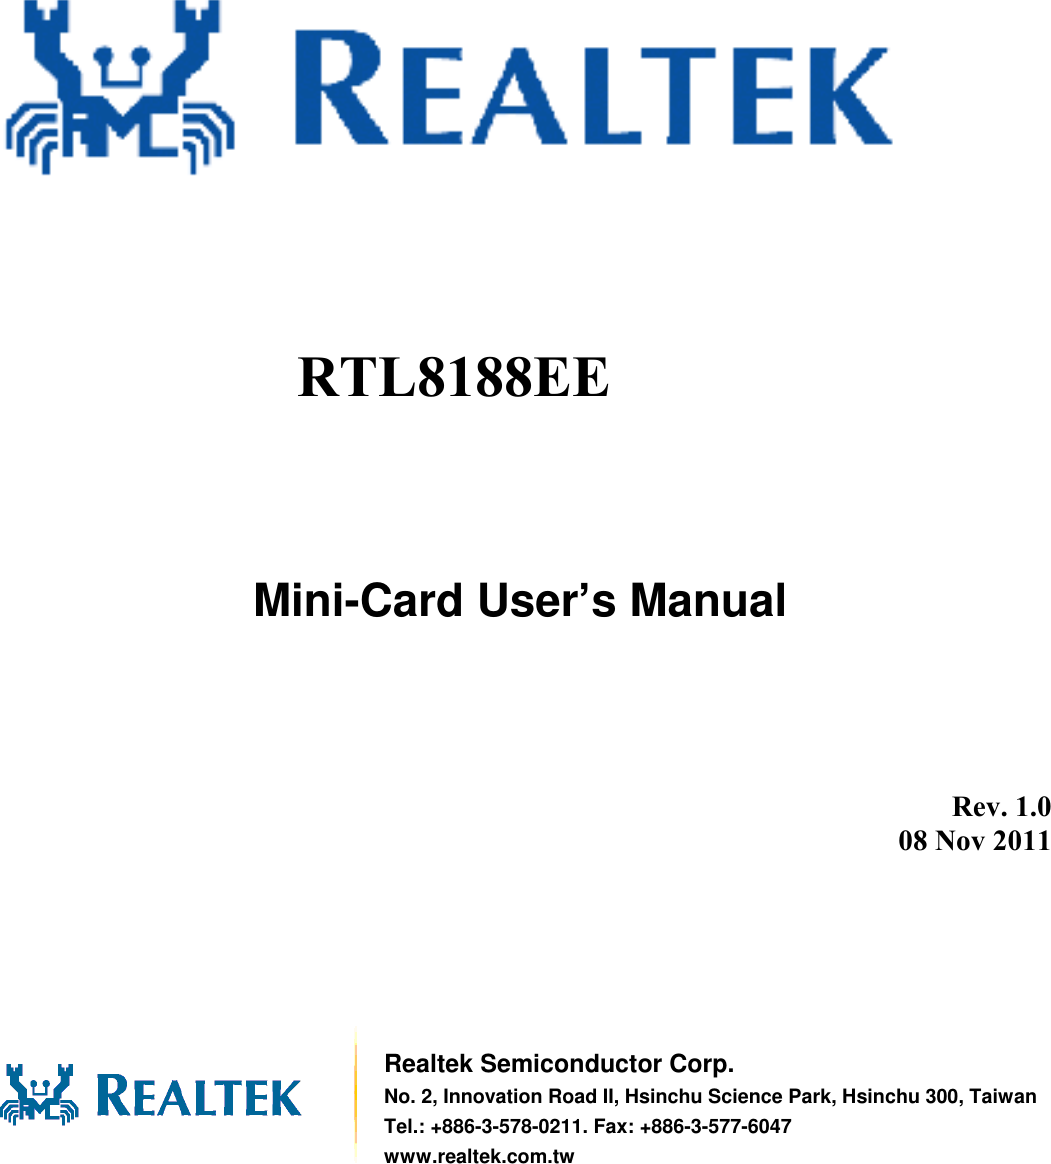                Mini-Card User’s Manual         Rev. 1.0 08 Nov 2011        Realtek Semiconductor Corp. No. 2, Innovation Road II, Hsinchu Science Park, Hsinchu 300, Taiwan Tel.: +886-3-578-0211. Fax: +886-3-577-6047 www.realtek.com.tw RTL8188EE  